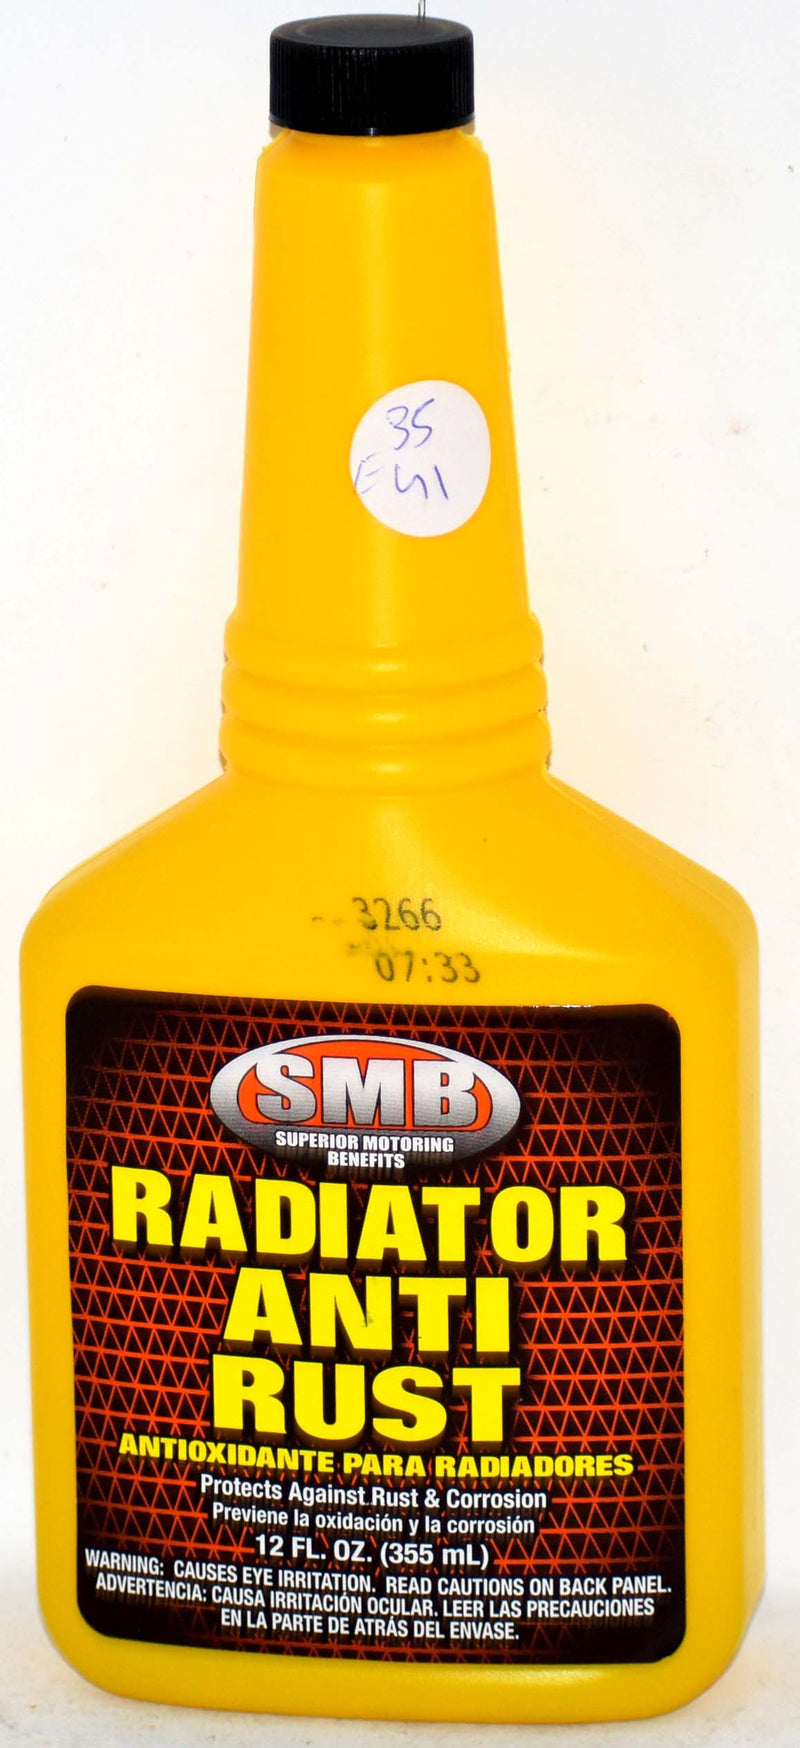 Radiator Anti Rust Antioxidant Fluid, 12 oz